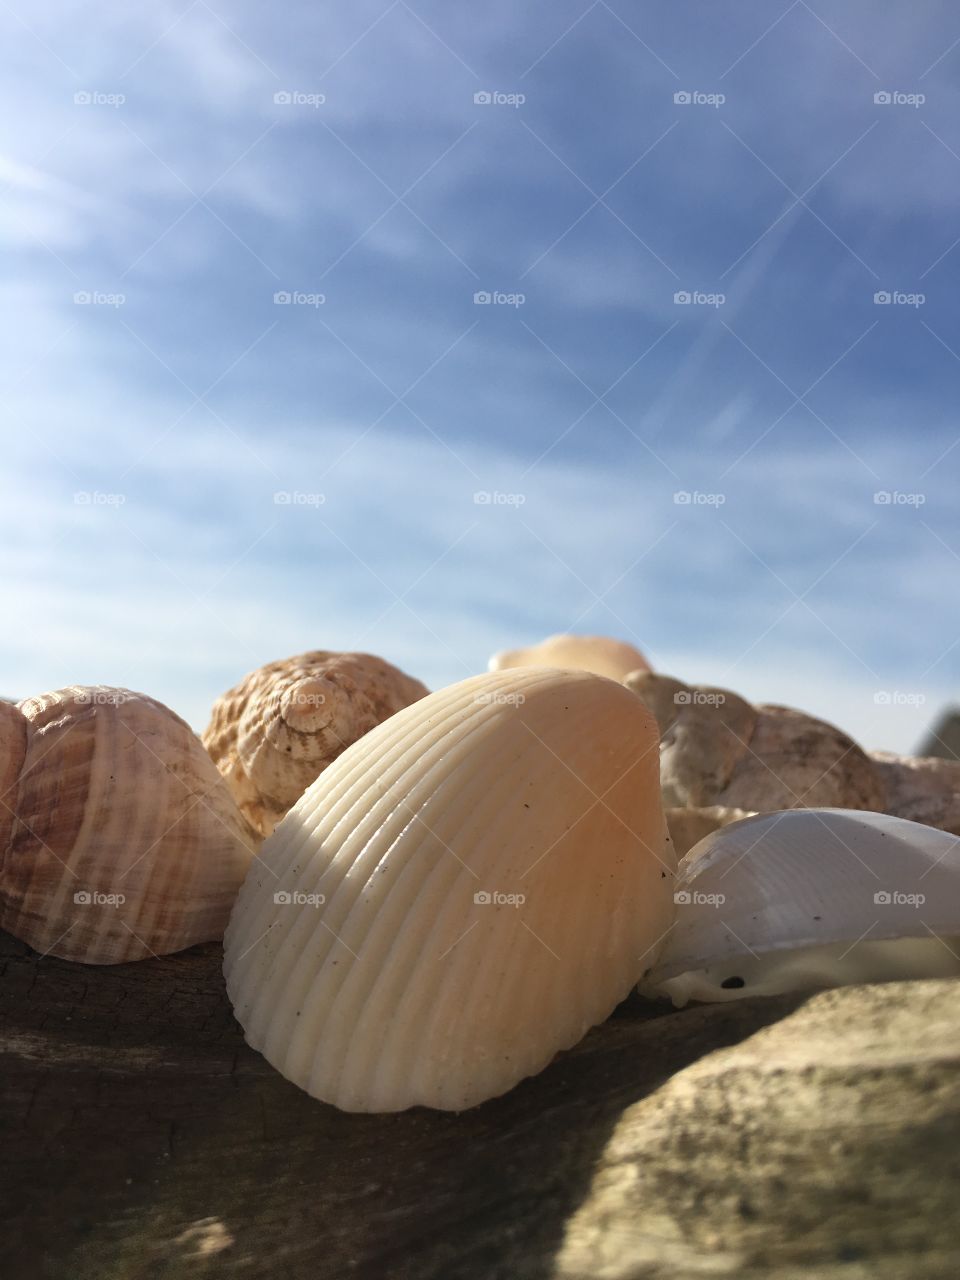 Sunshine on the seashells. 